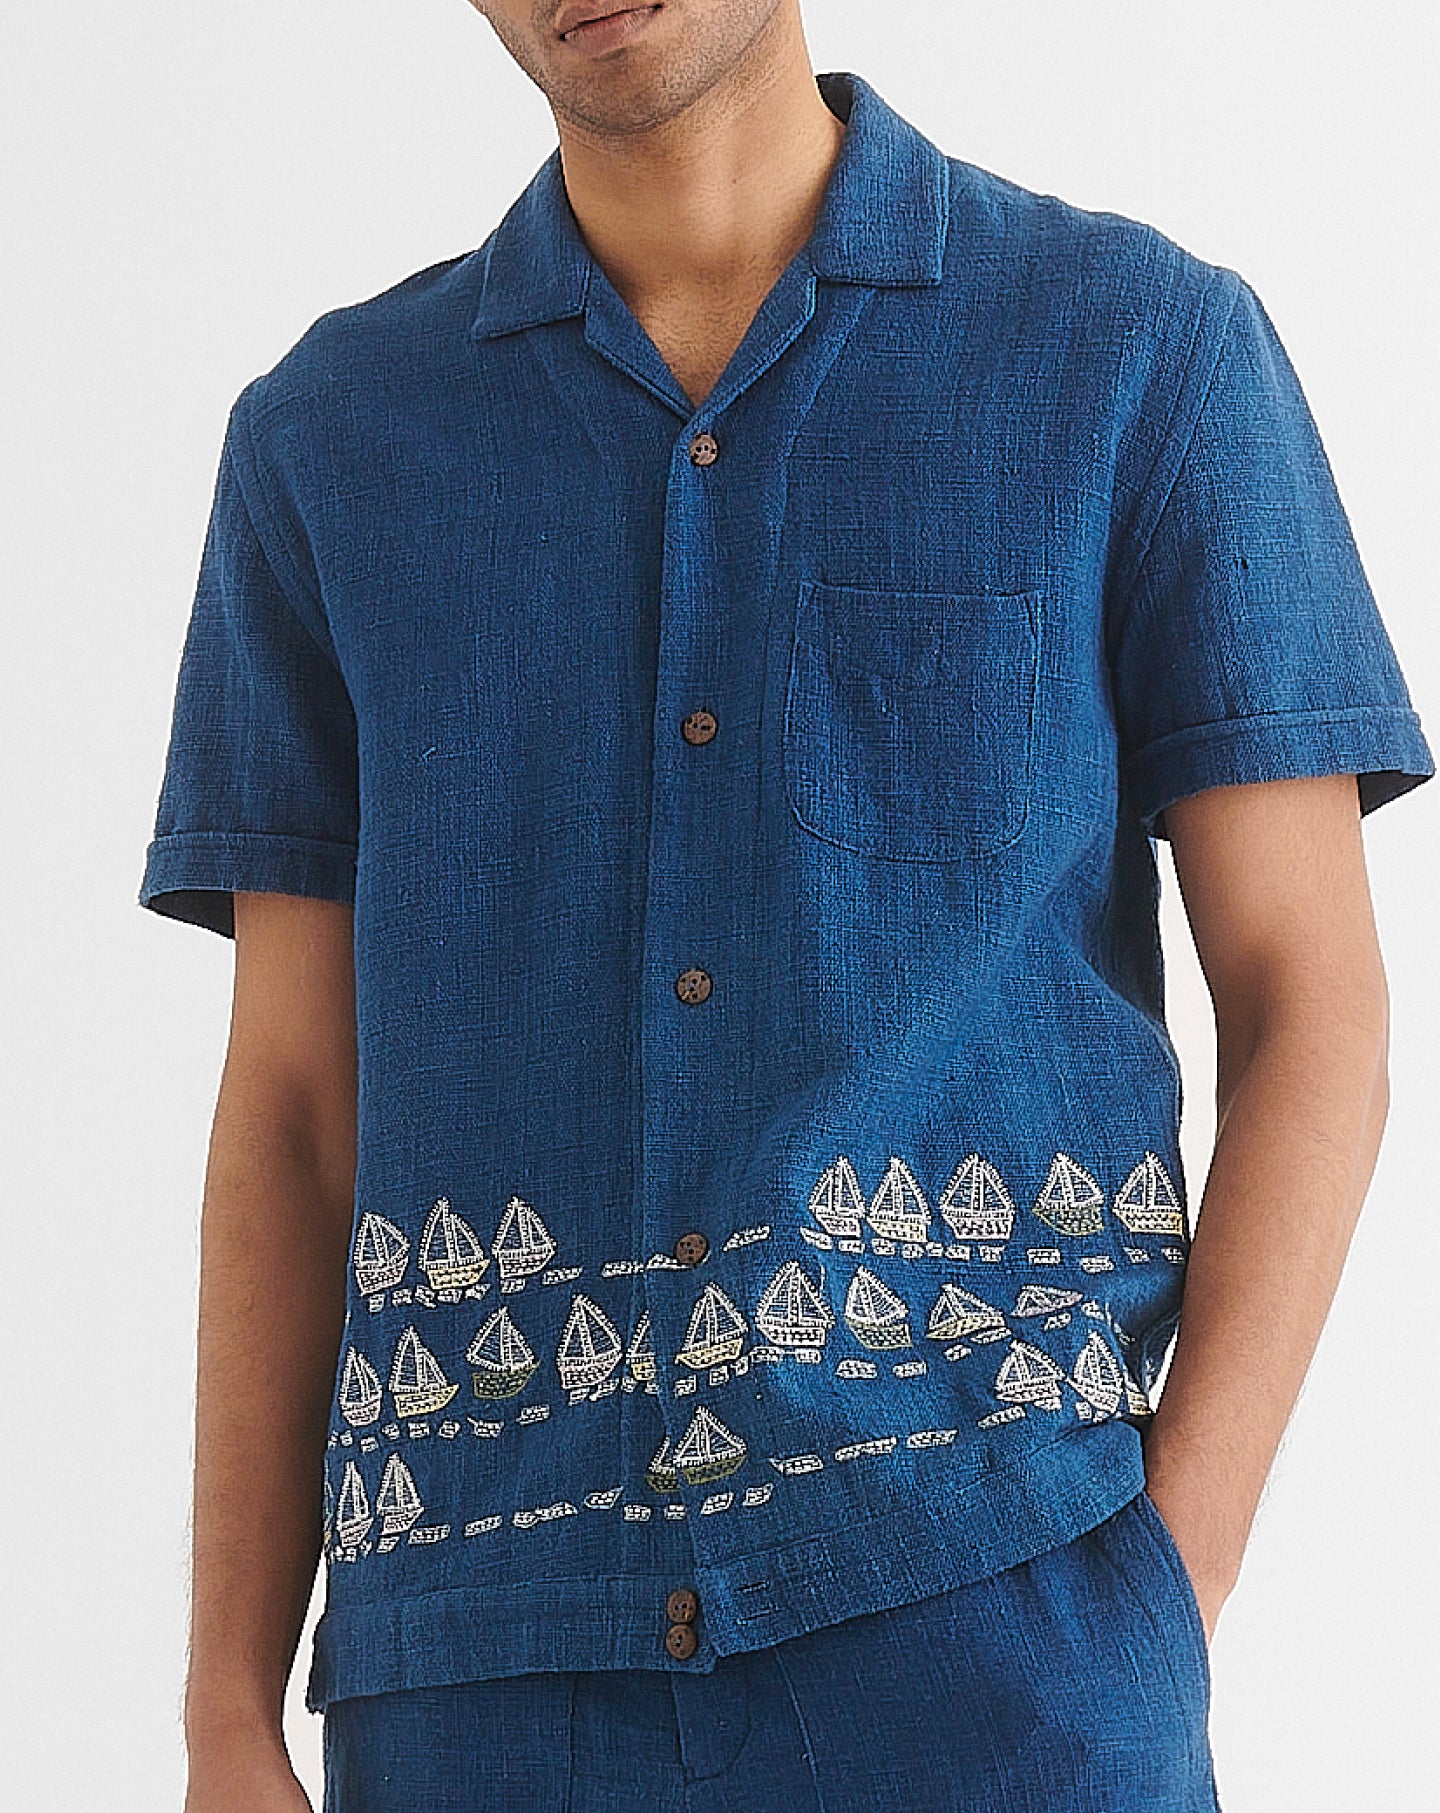 Paraiso Camp Collar Shirt in Midnight Blue